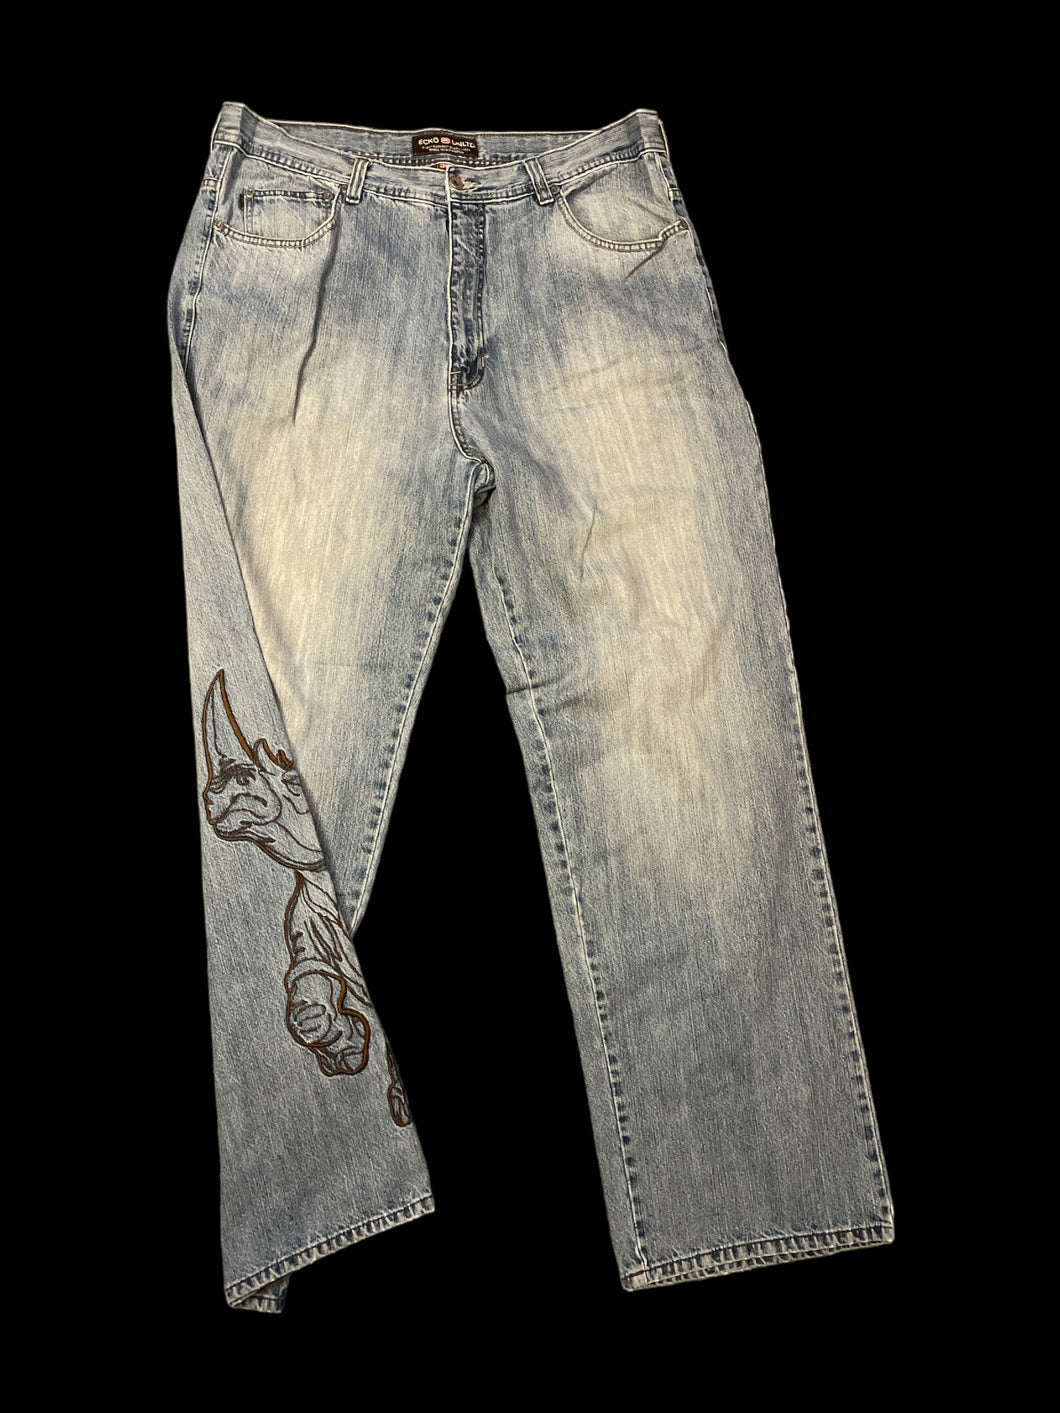 1X Light blue denim jeans w/ large brown embroidered rhinoceros on leg, belt loops, pockets, & button/zipper closure